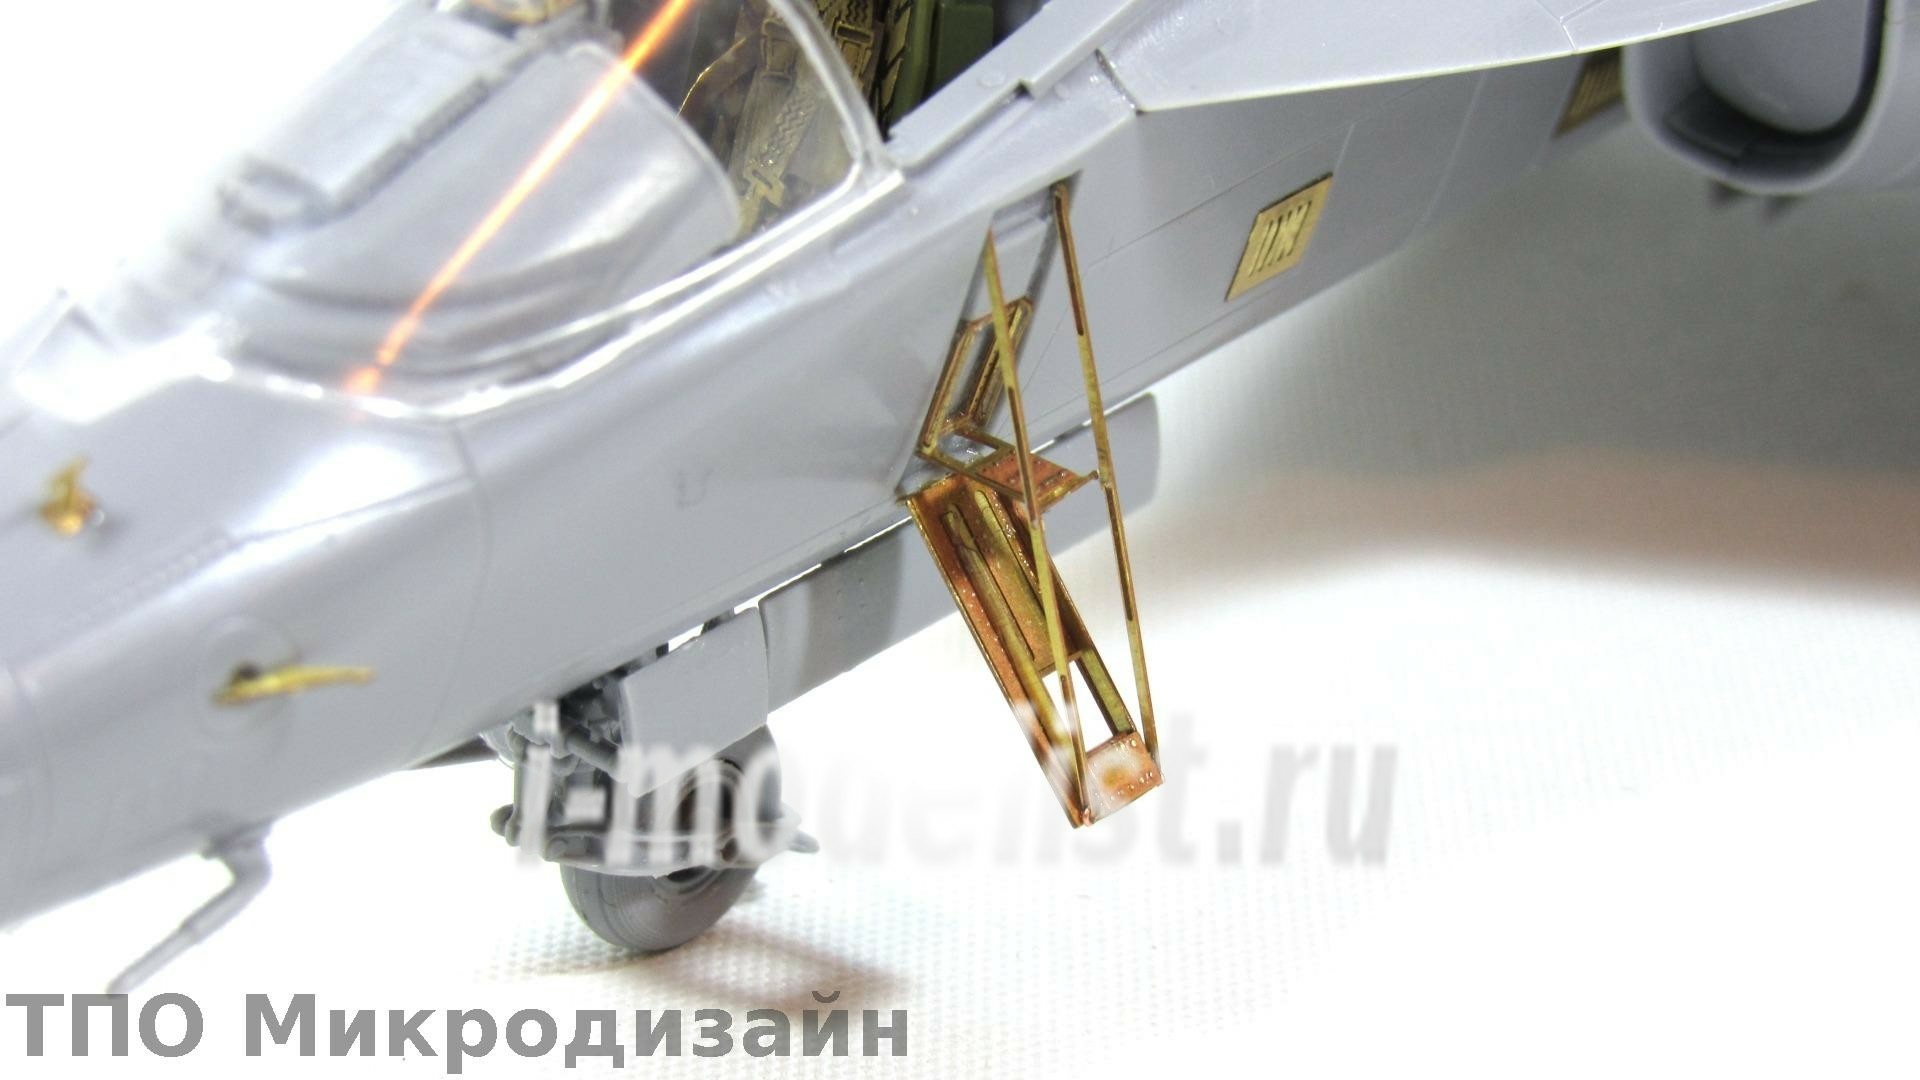 048218 Microdesign 1/48 Yak-130 (STAR)